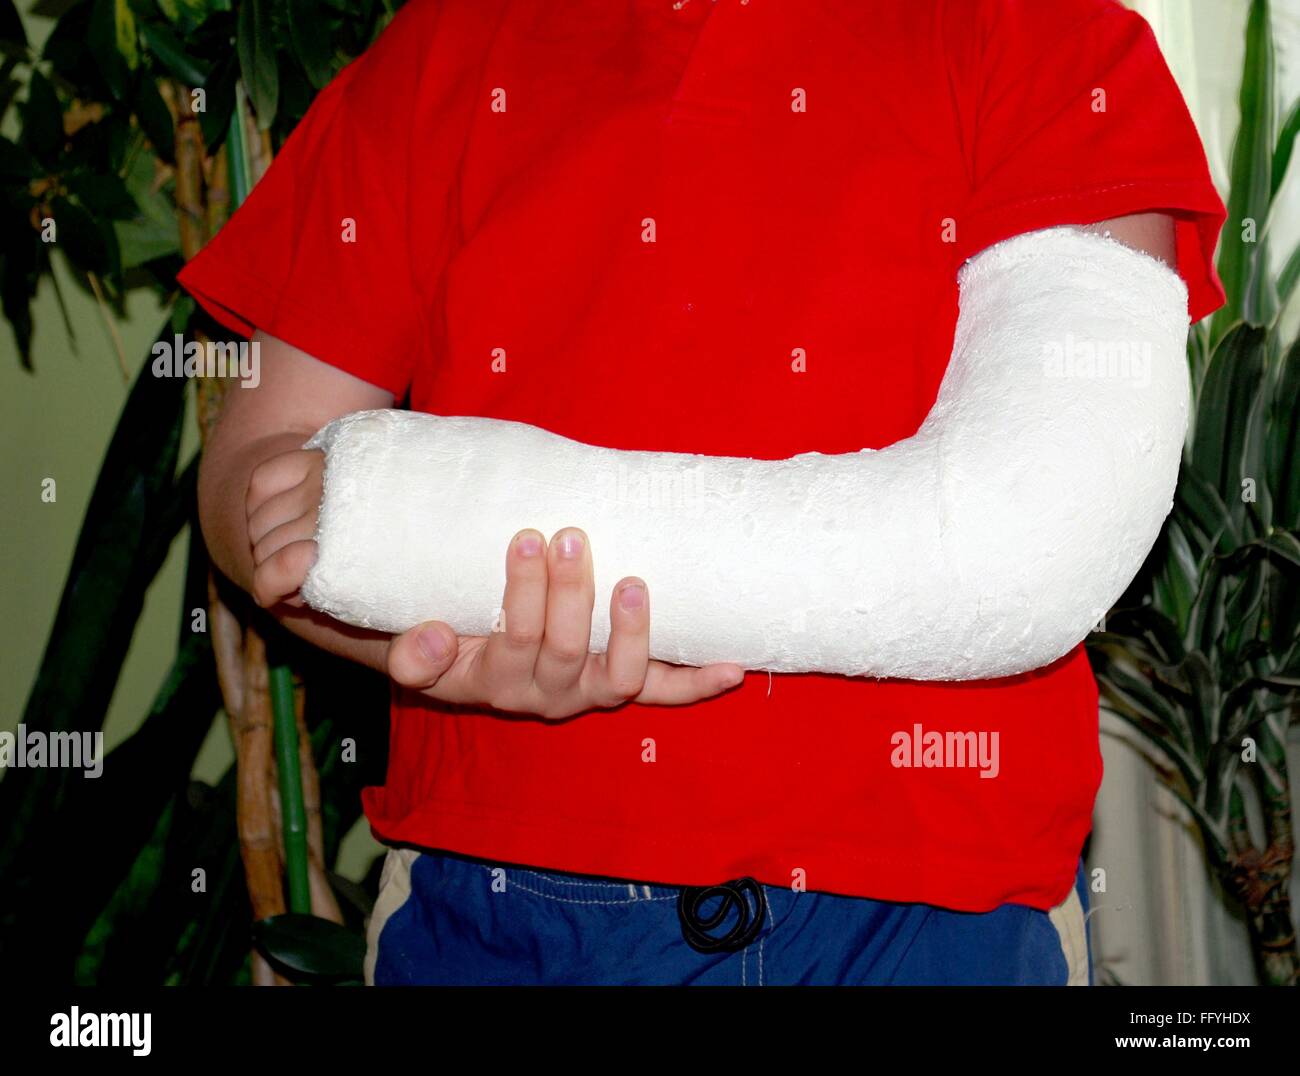 A Short-arm thumb spica cast. B Forearm gauntlet cast.